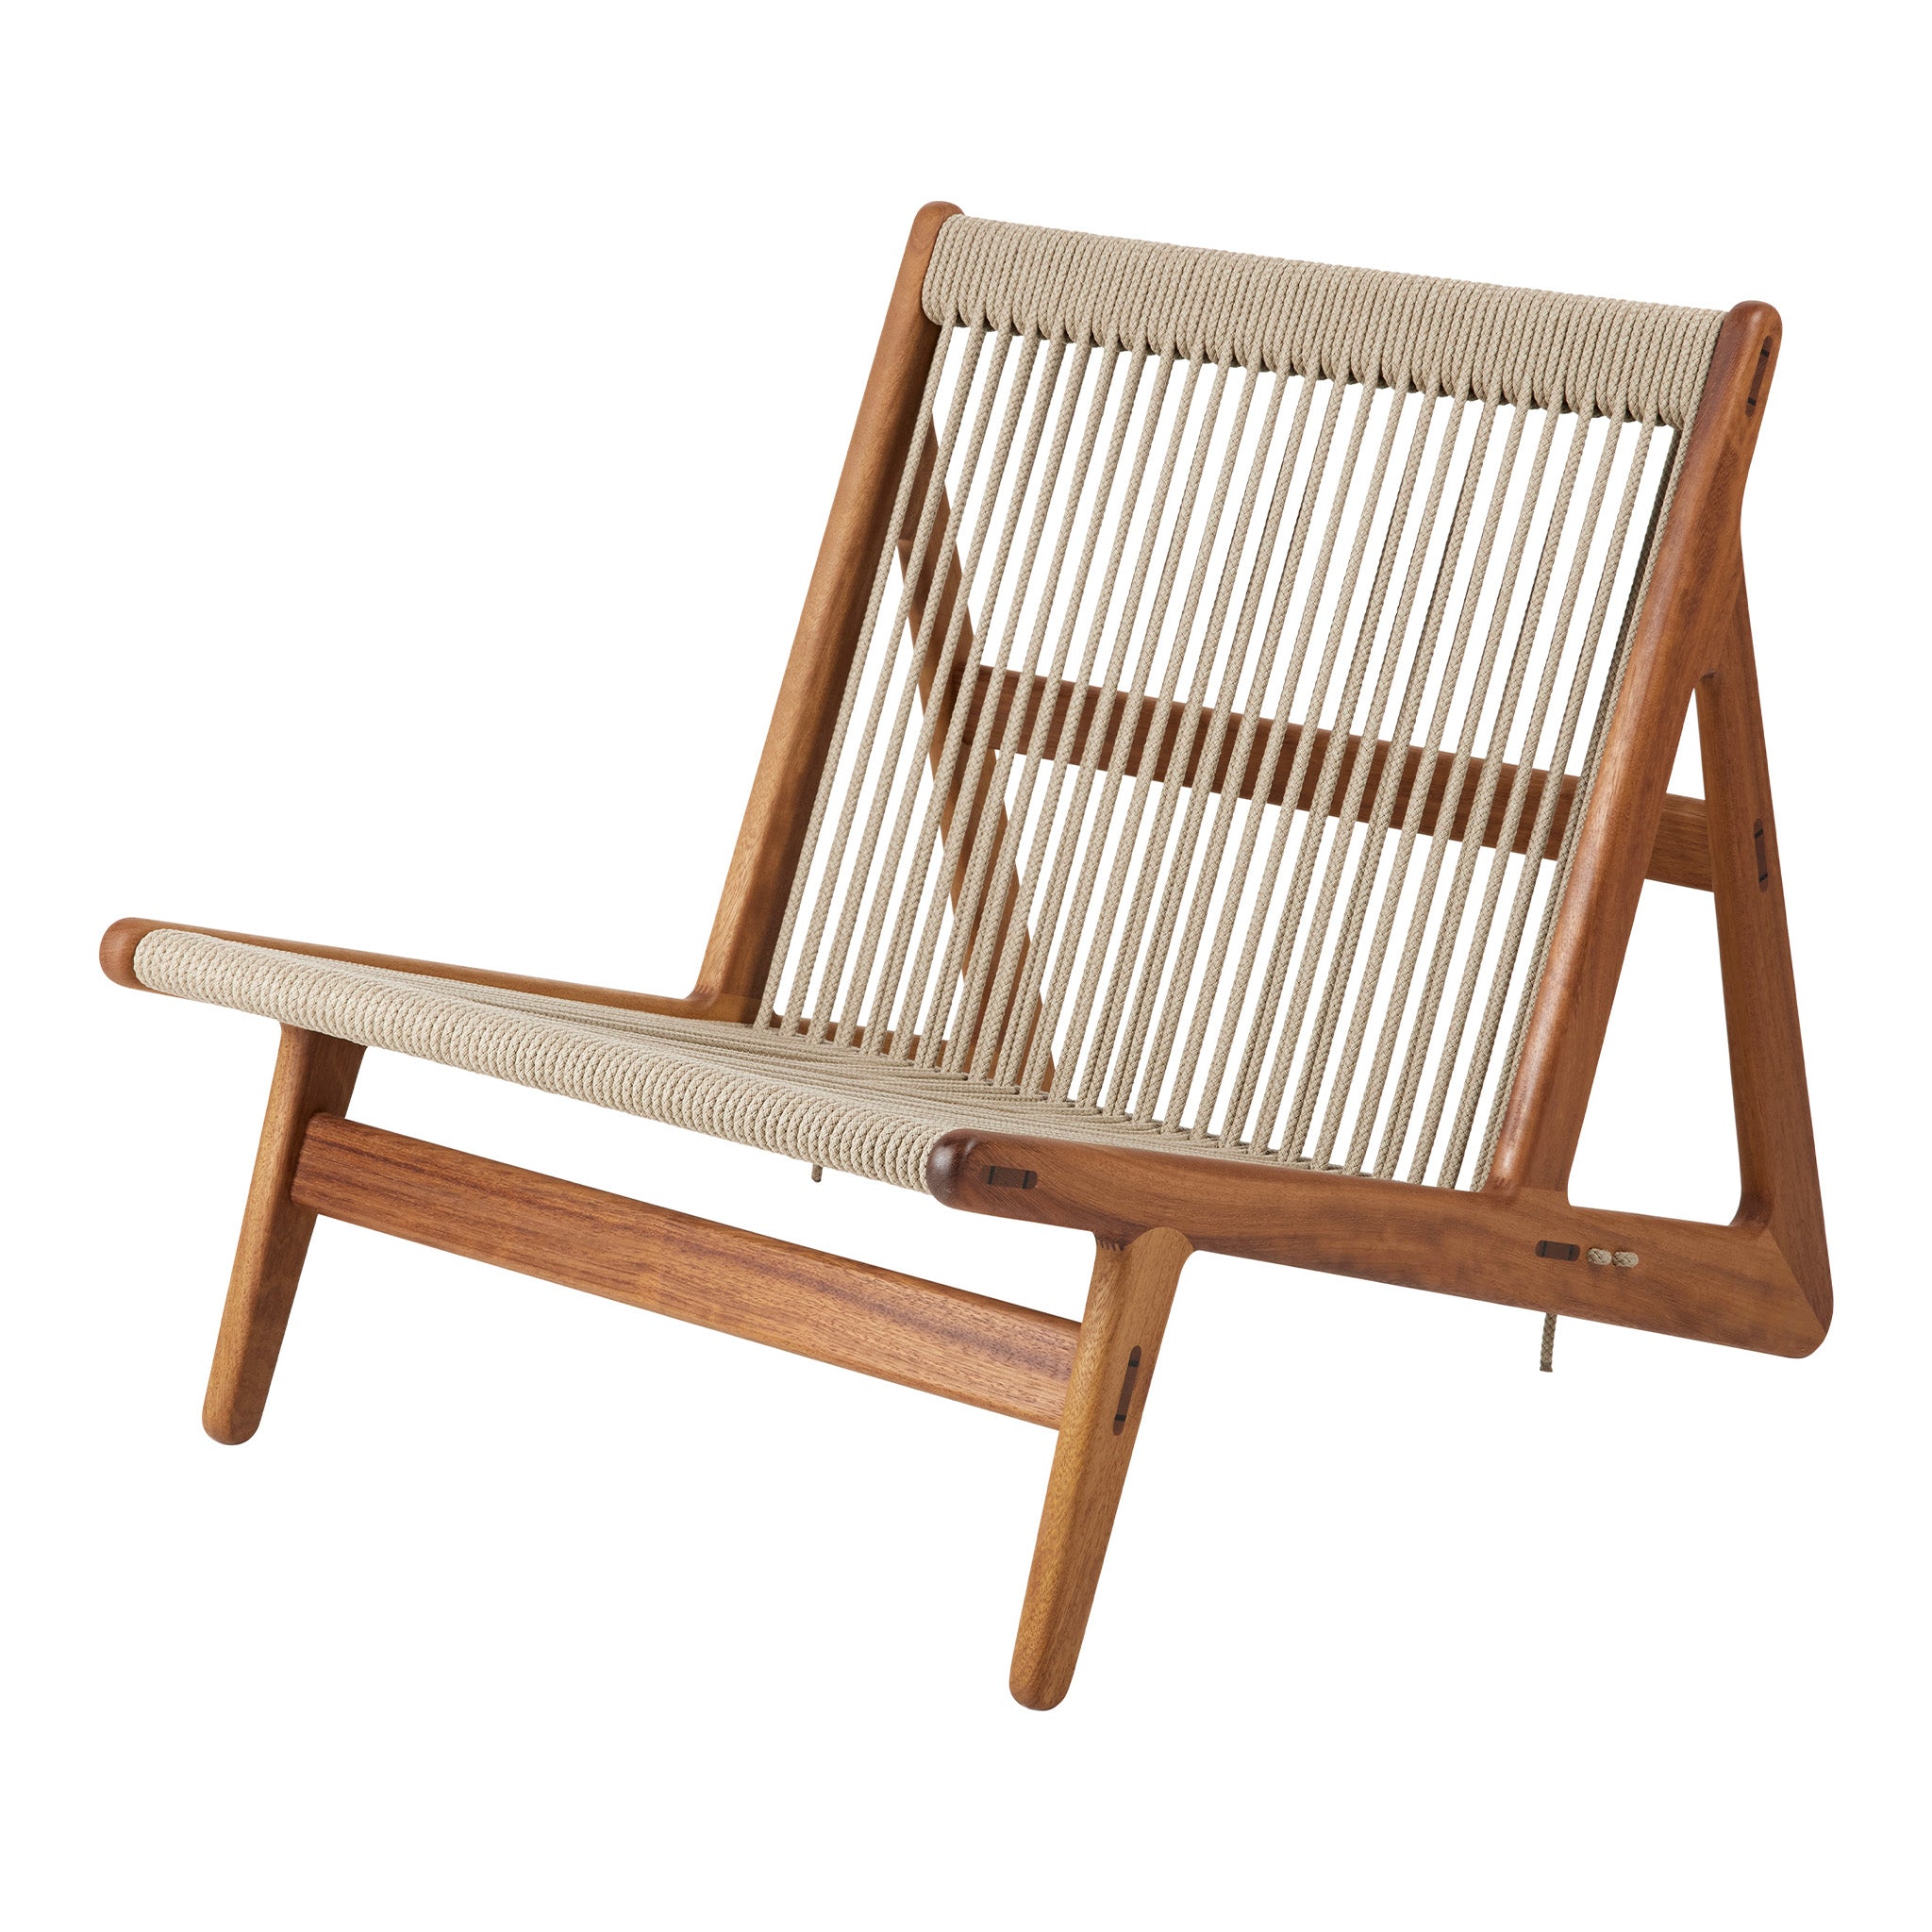 MR01 Initial Lounge Chair Outdoor by Mathias Steen Rasmussen for Gubi